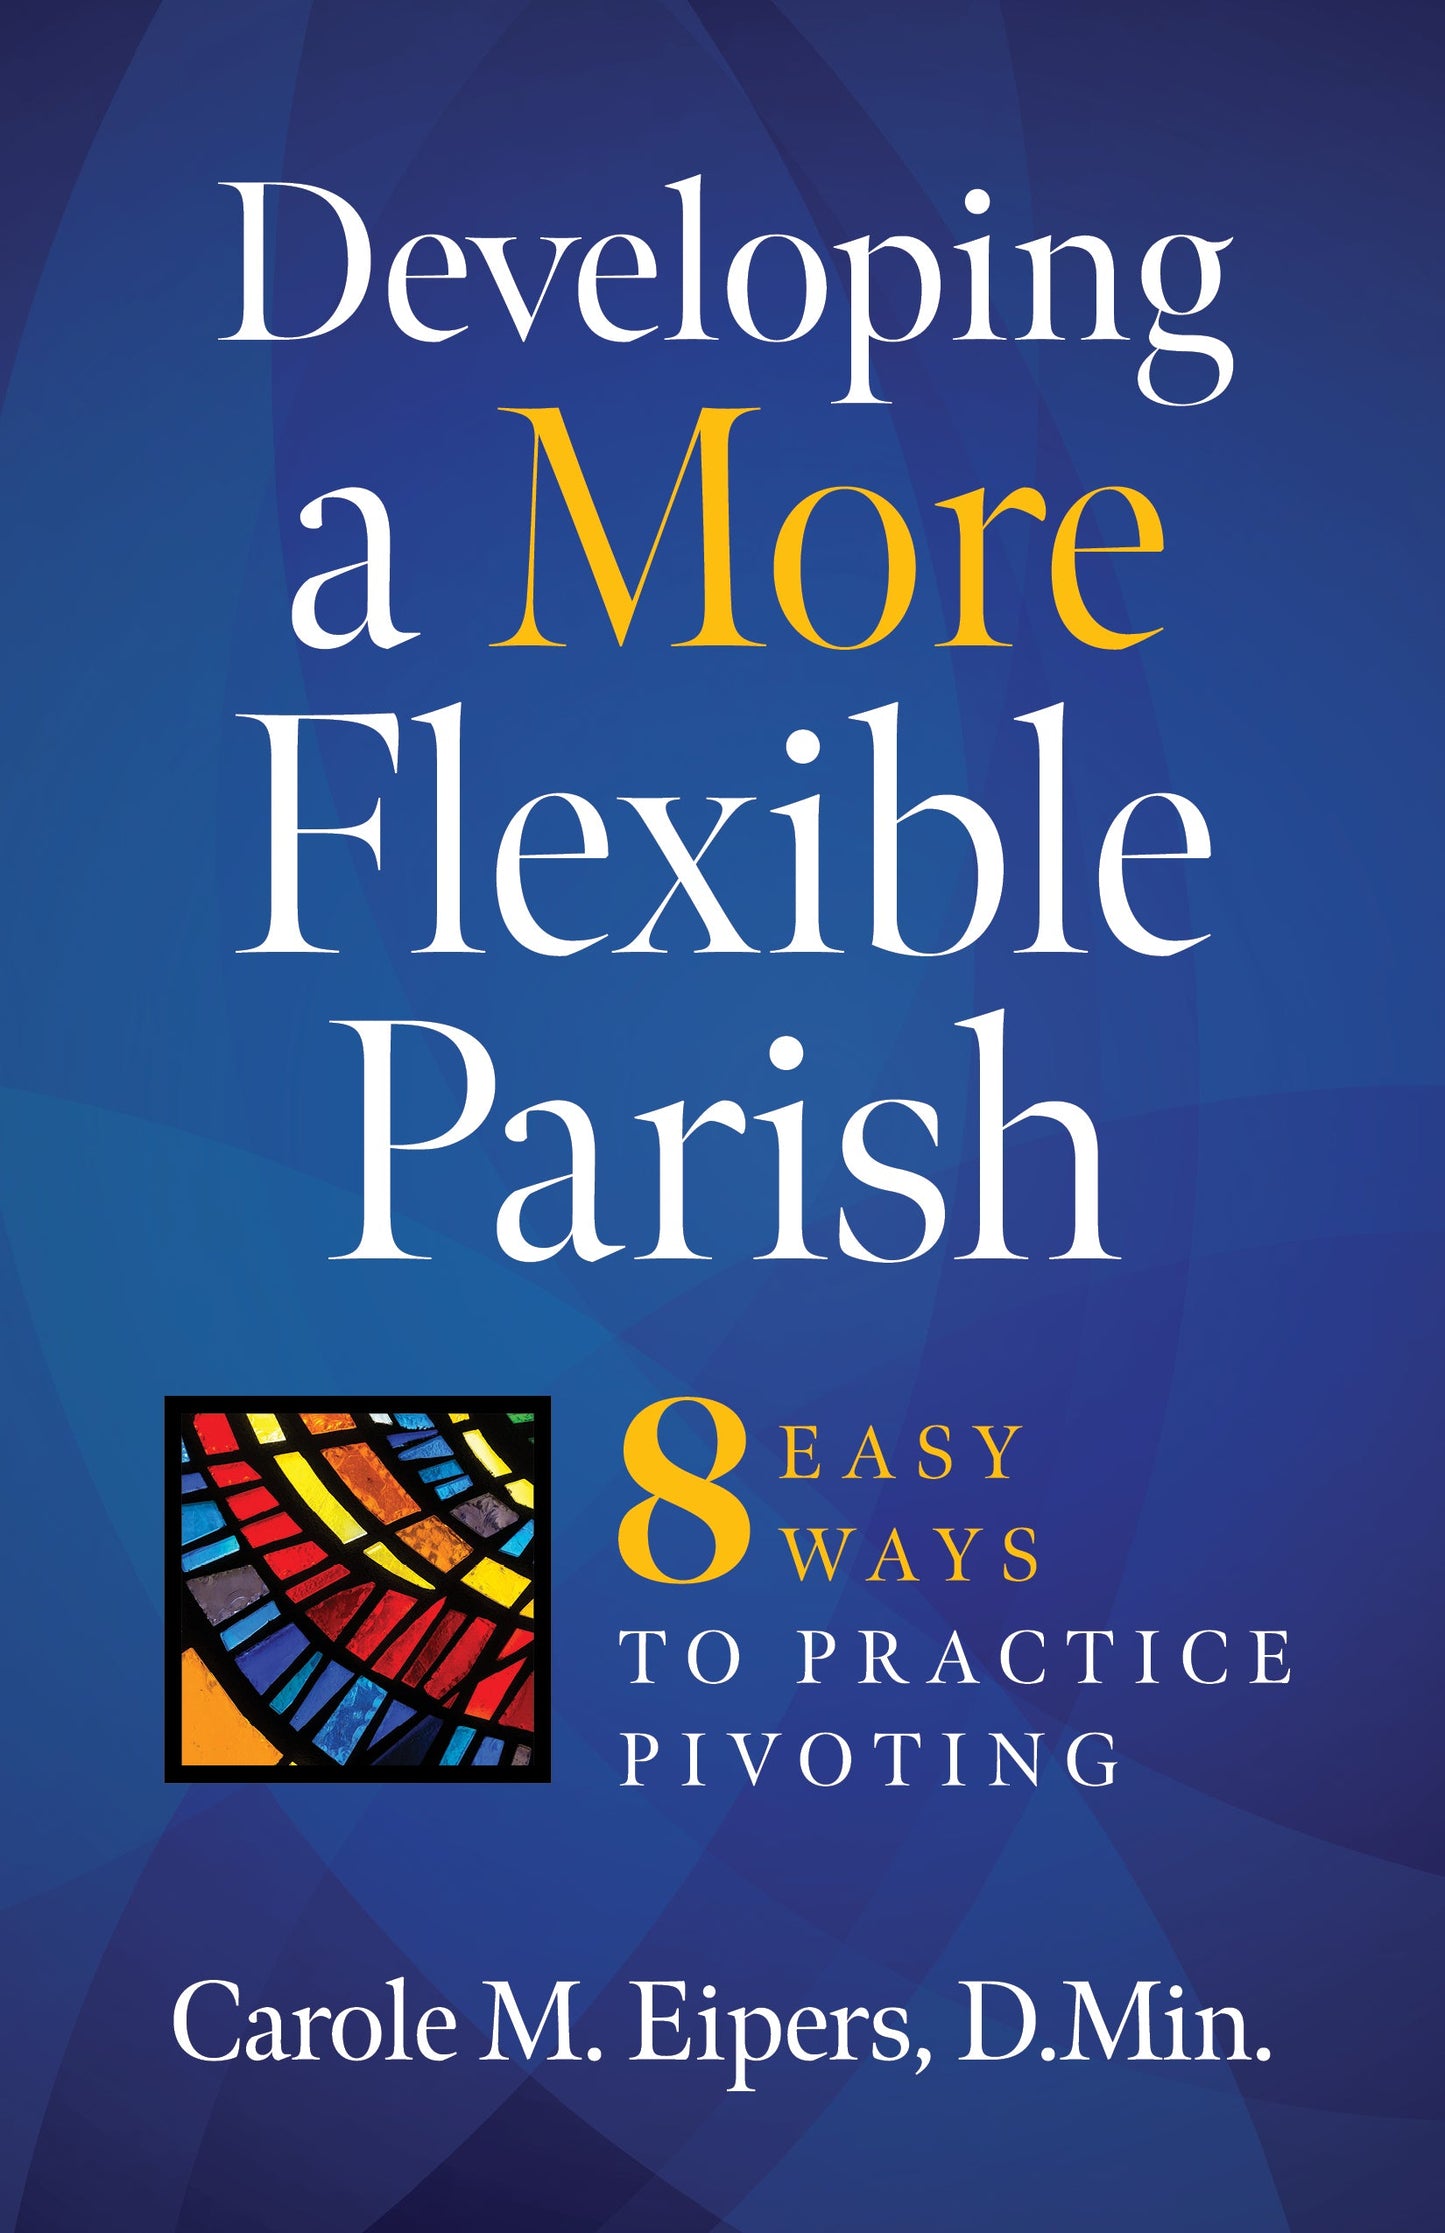 Developing a More Flexible Parish